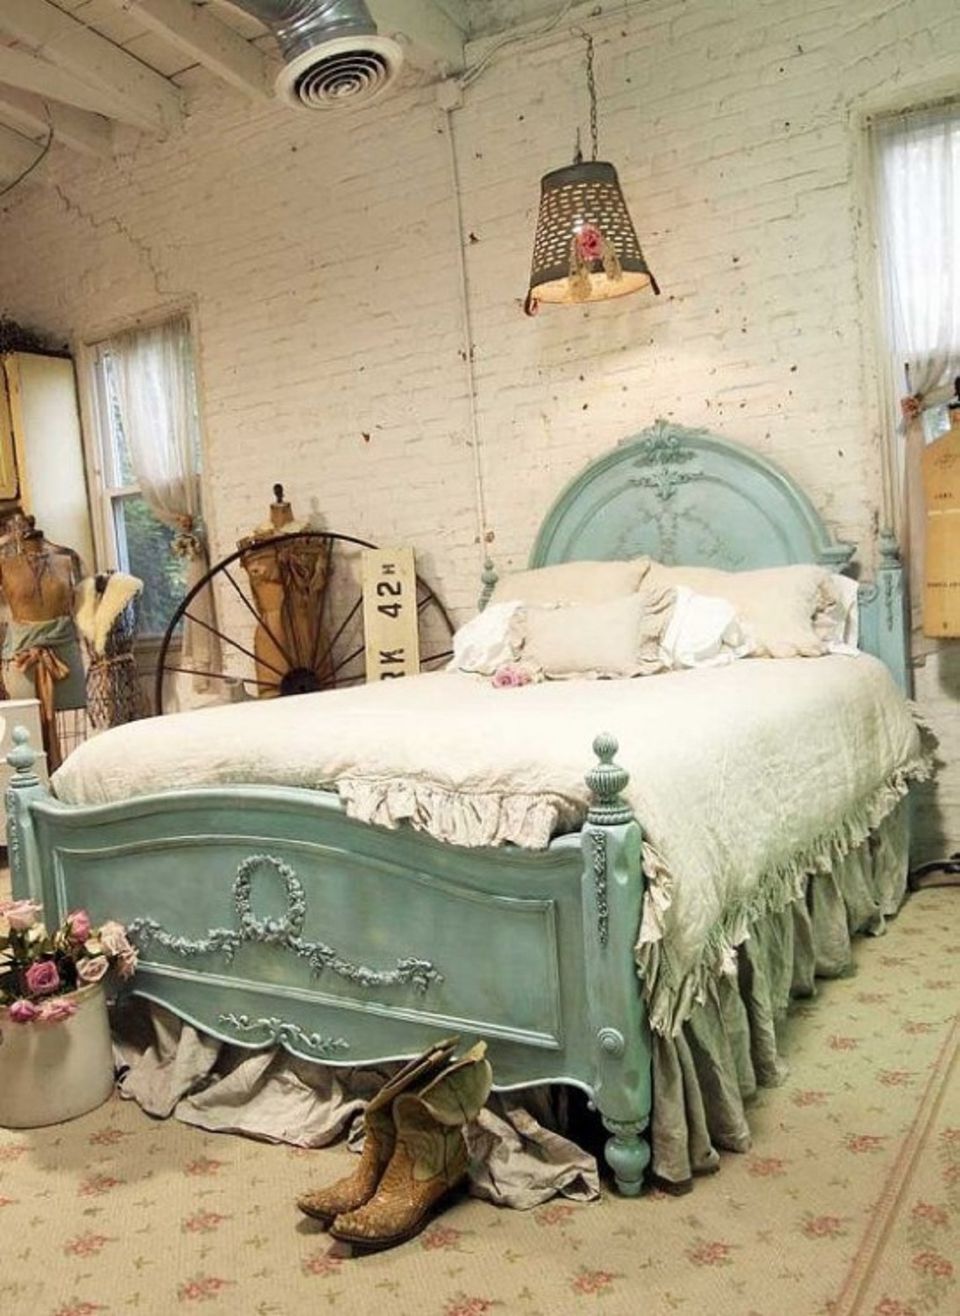 Vintage Concept for bedroom interior